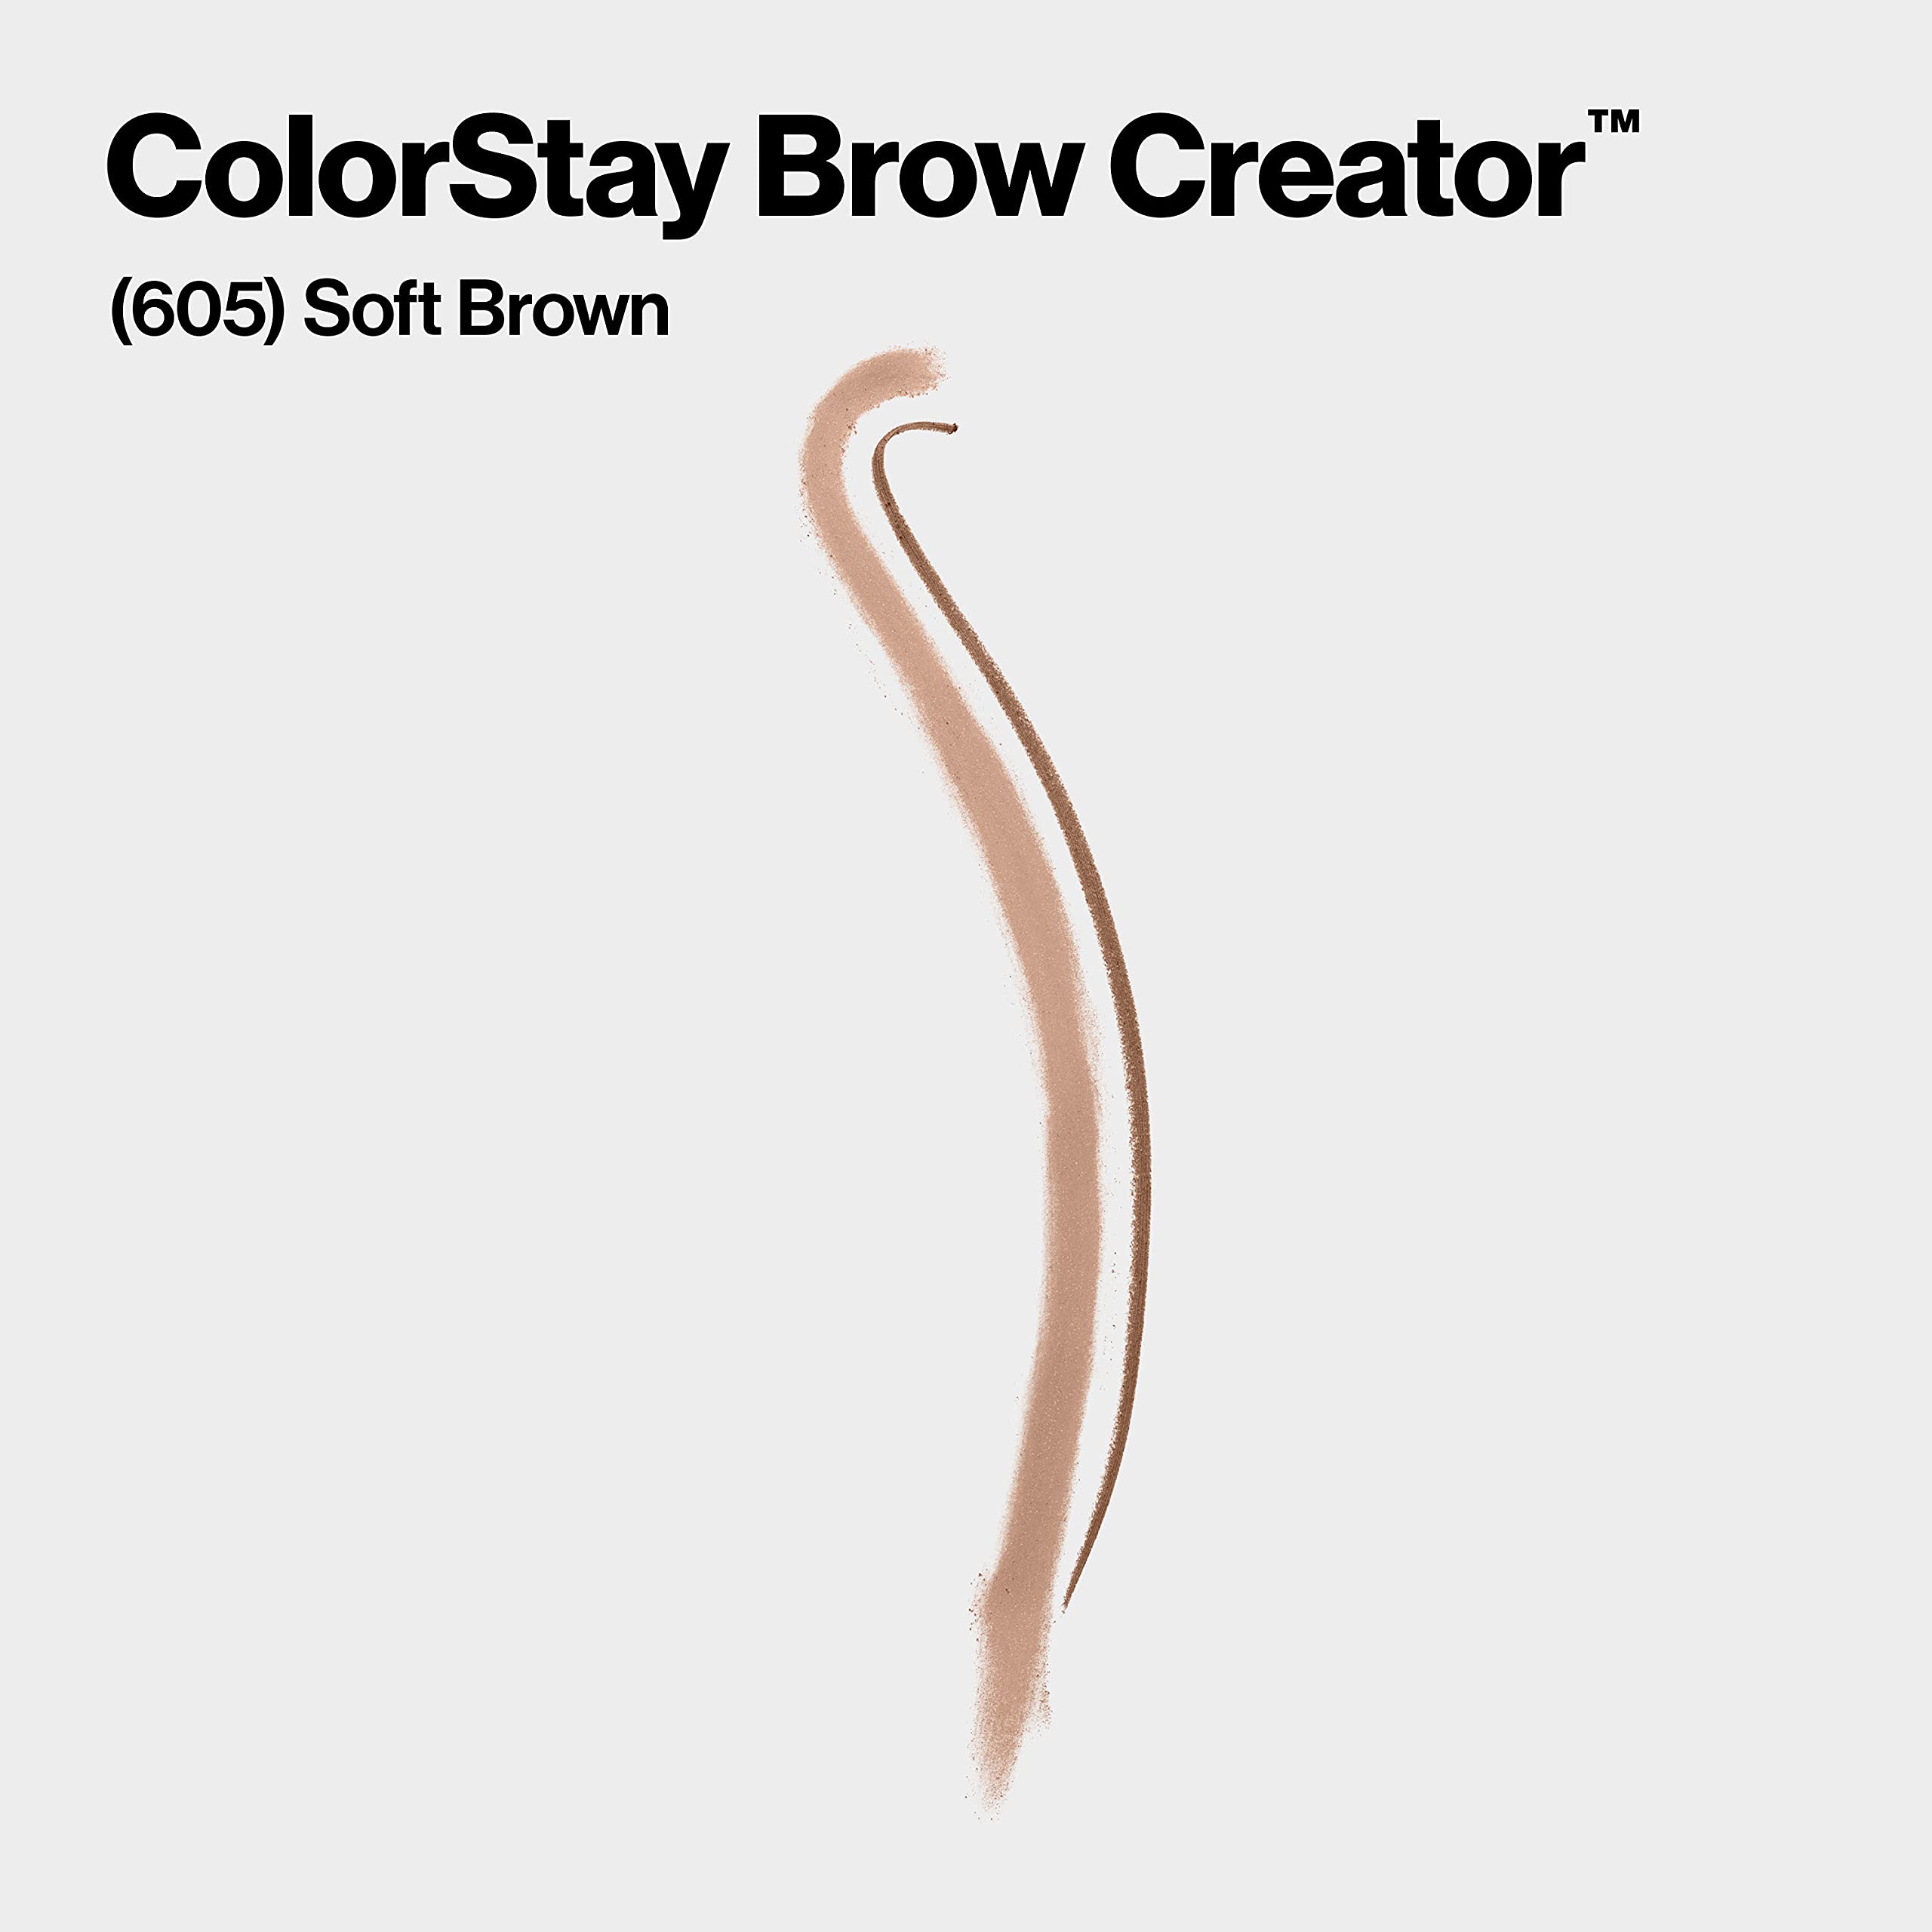 REVLON ColorStay Brow Creator Micro Pencil Powder & Brush